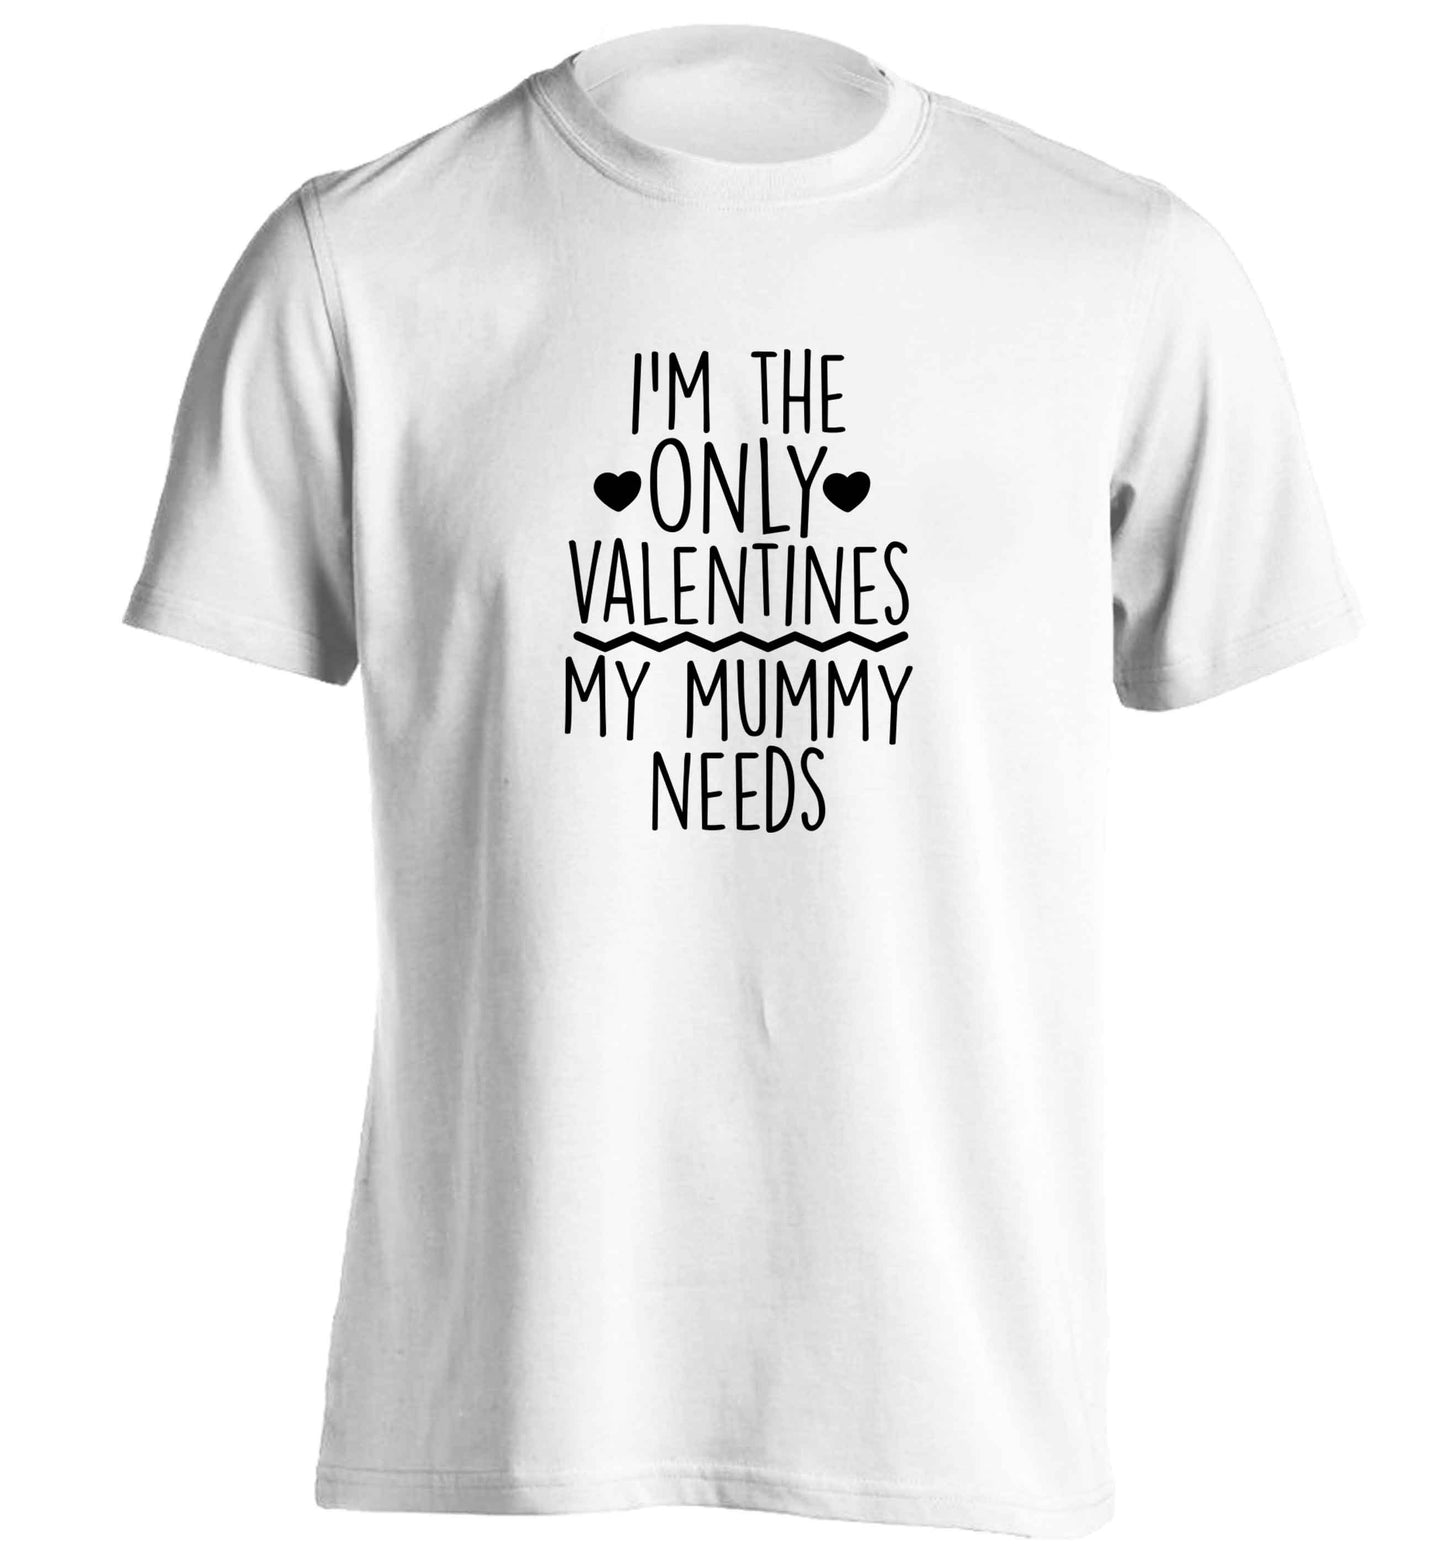 I'm the only valentines my mummy needs adults unisex white Tshirt 2XL